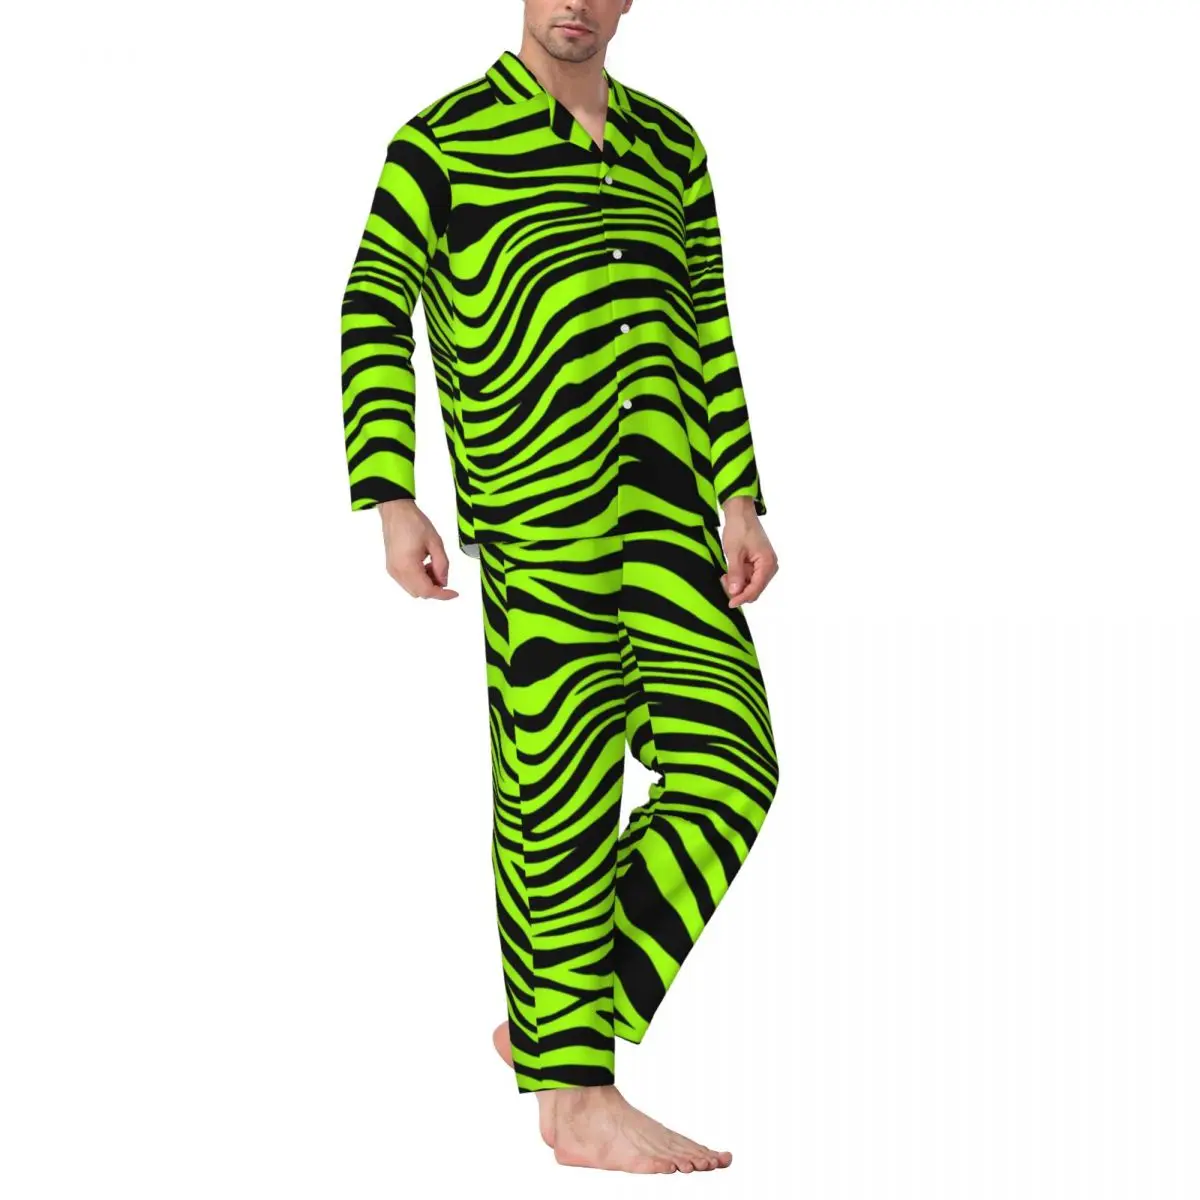 

Green Tiger Lines Pajama Sets Autumn Animal Print Cute Soft Leisure Sleepwear Man 2 Pieces Casual Oversized Nightwear Gift Idea